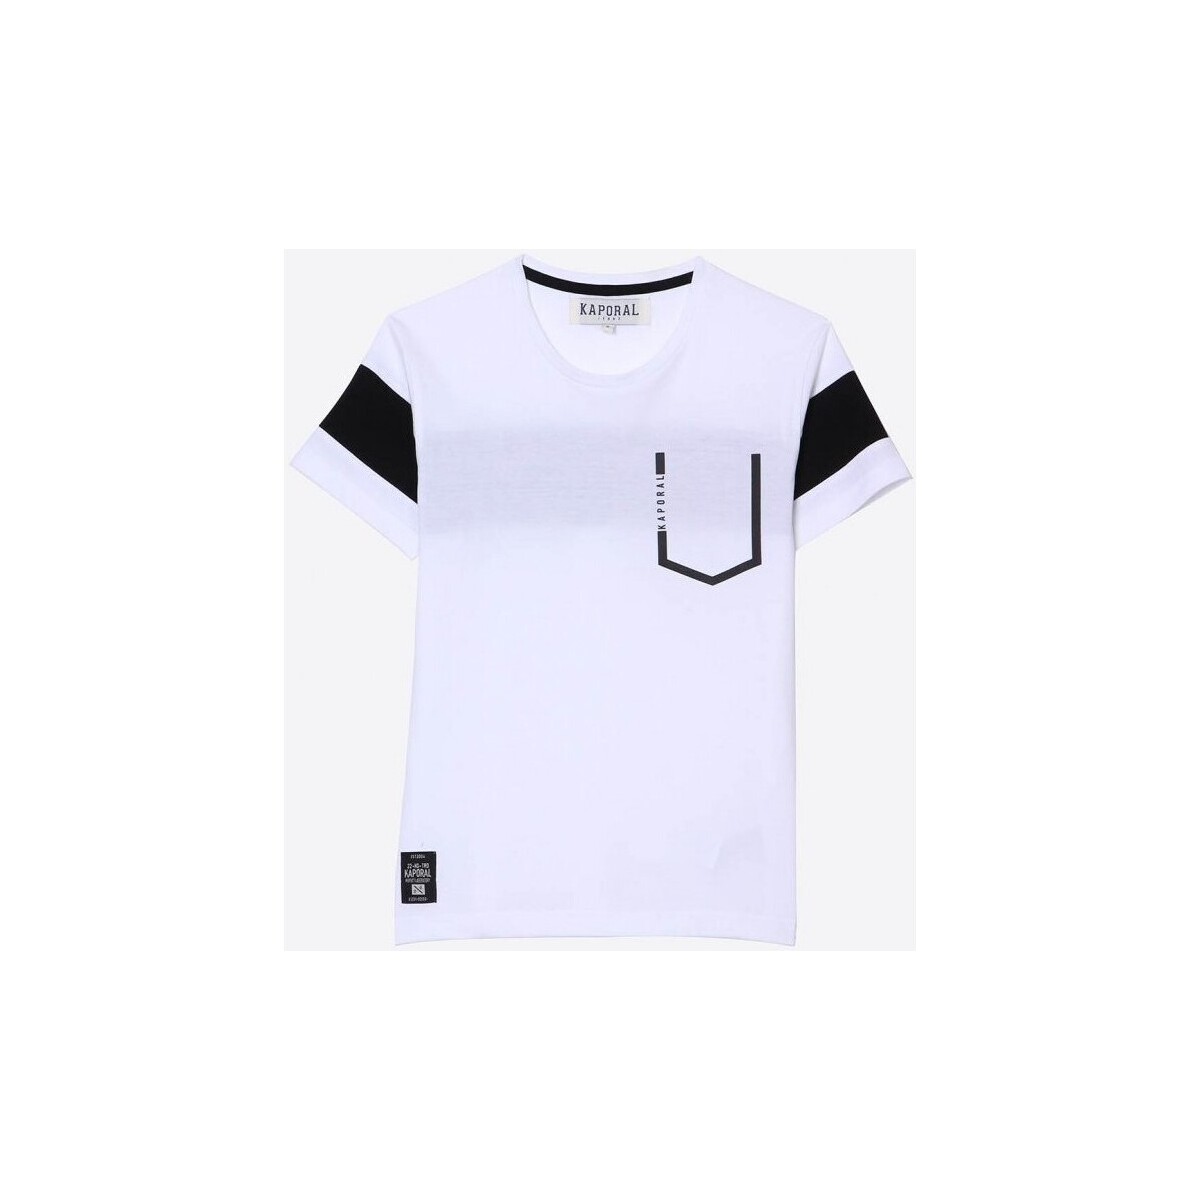 Kaporal Autres Junior - Tee shirt - blanc UjhQ6Wi7